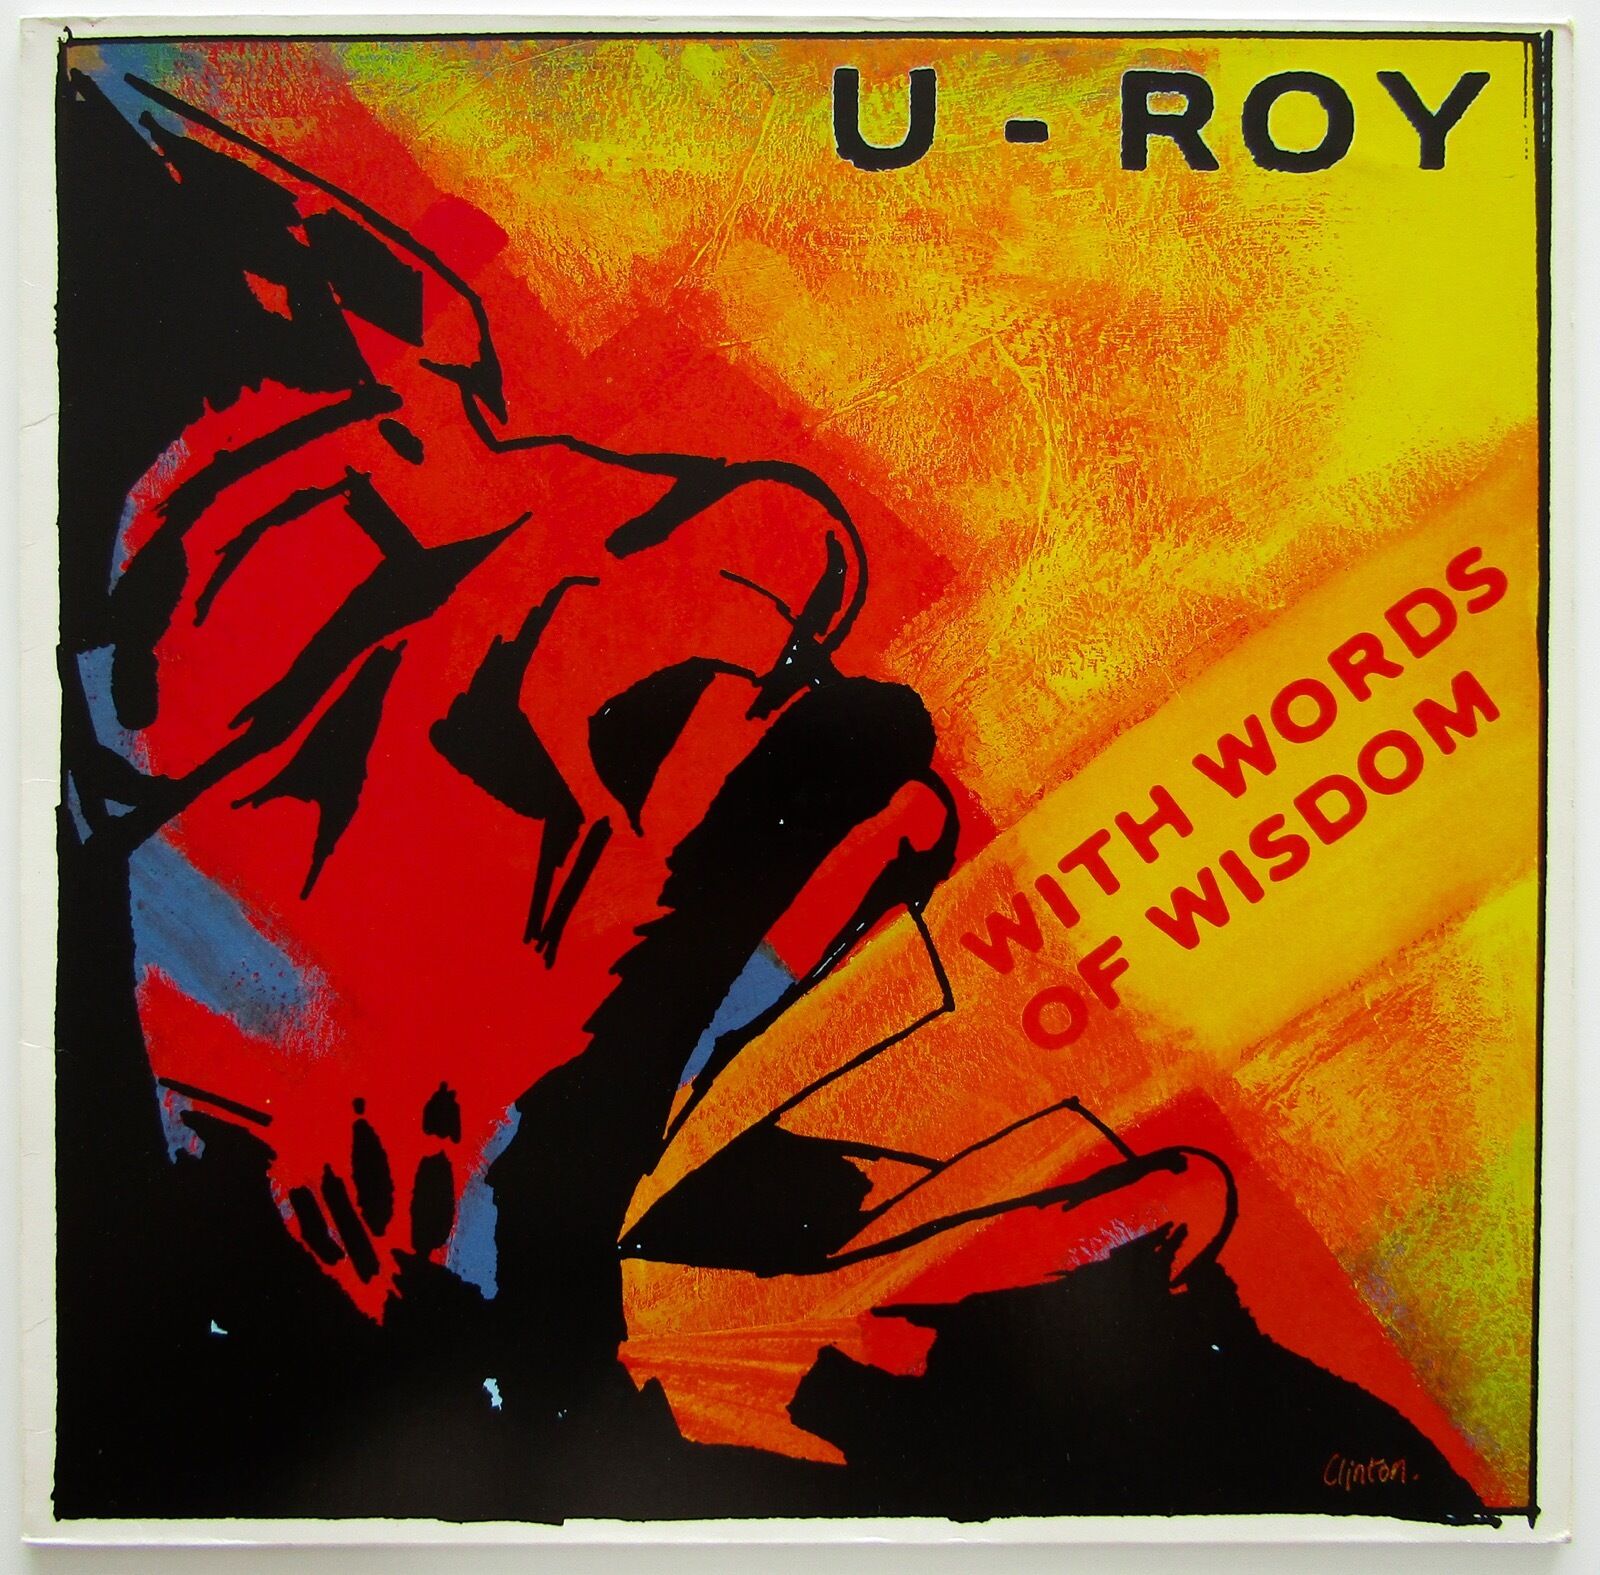 U-Roy - With Words Of Wisdom Vinyl LP